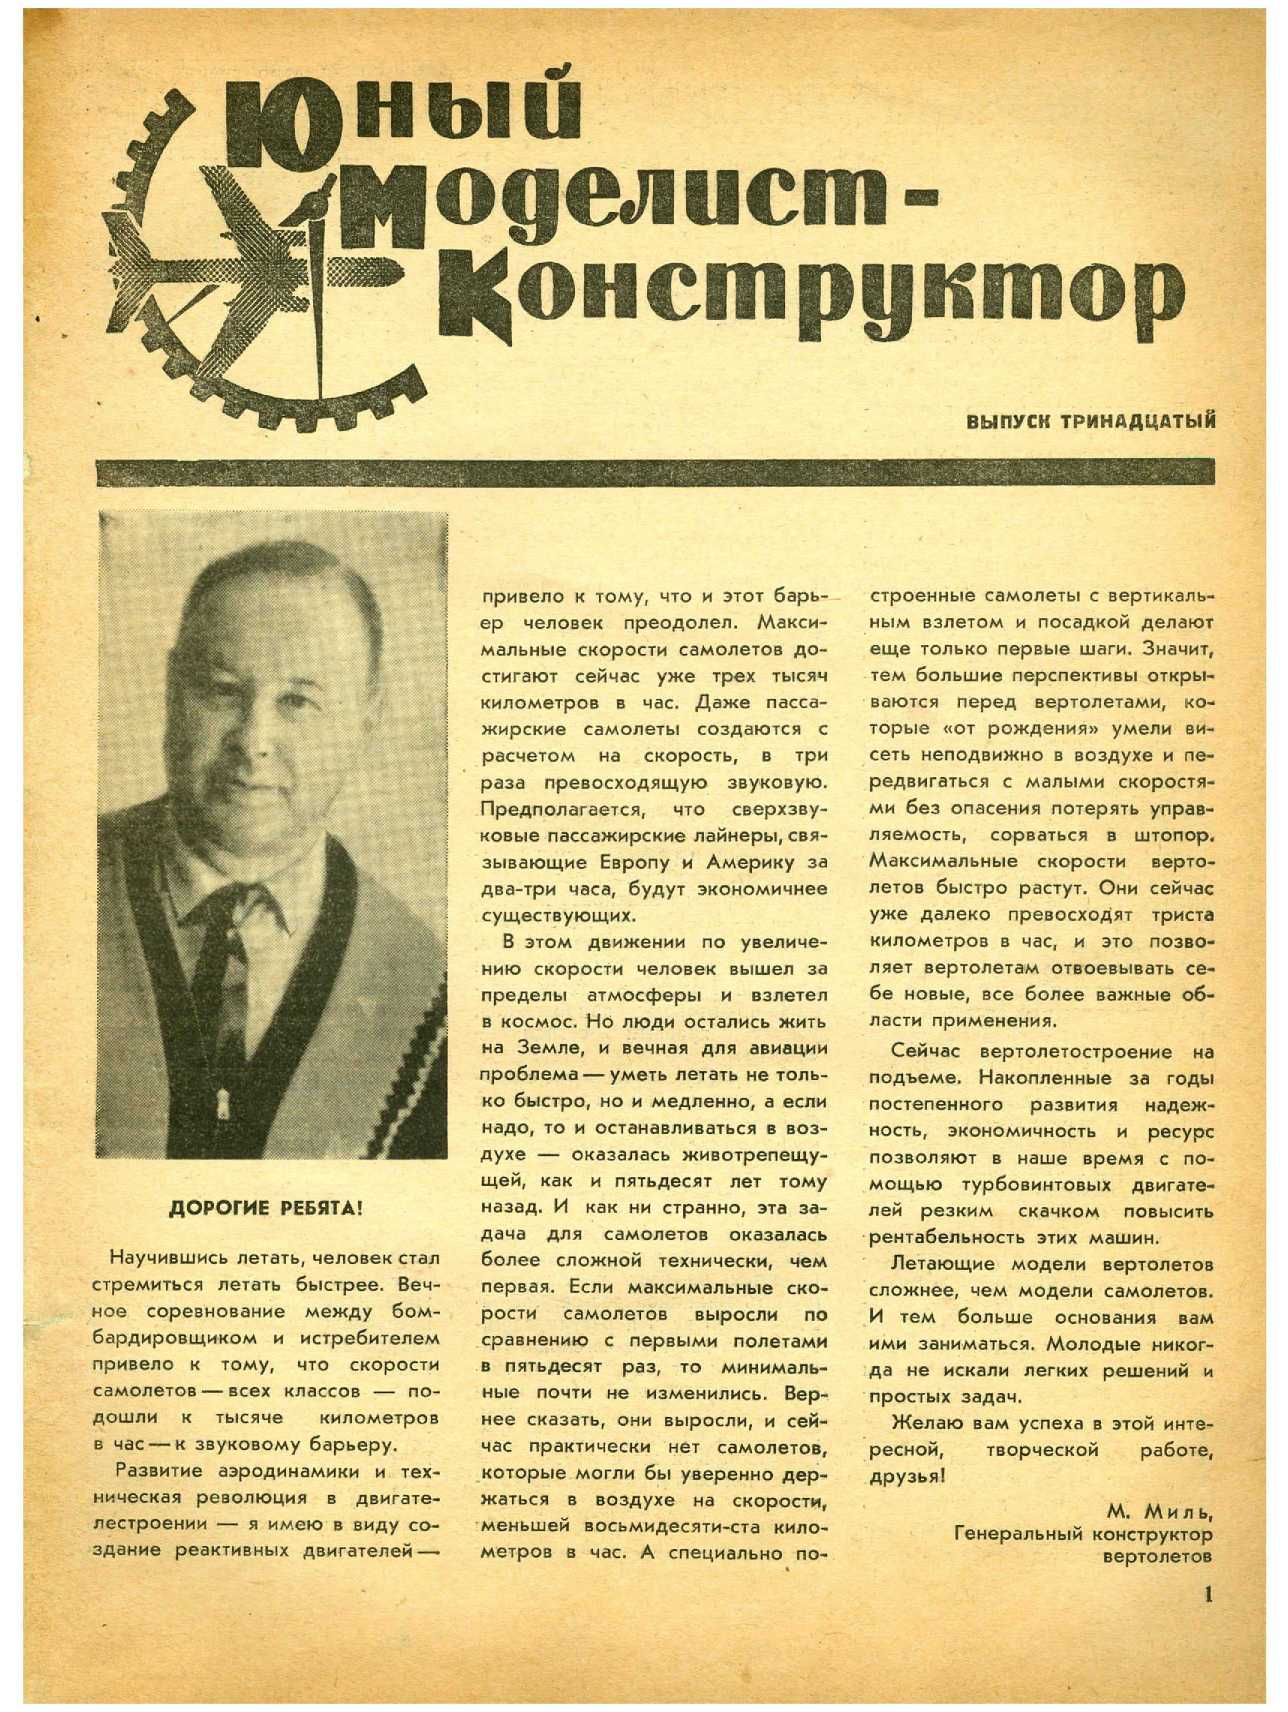 ЮМК 13, 1965, 1 c.